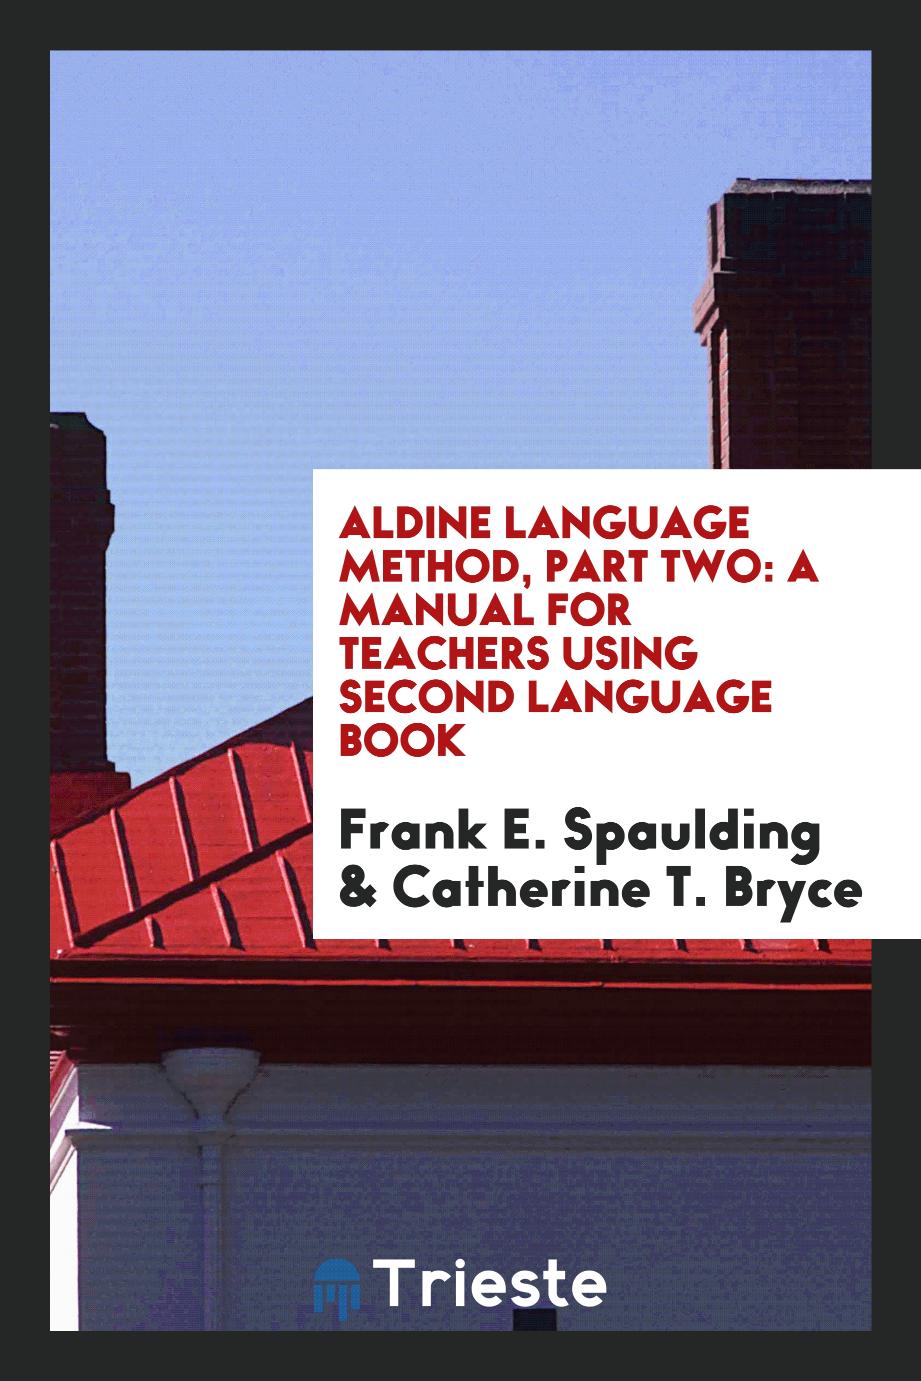 Aldine Language Method, Part Two: A Manual for Teachers Using Second Language Book